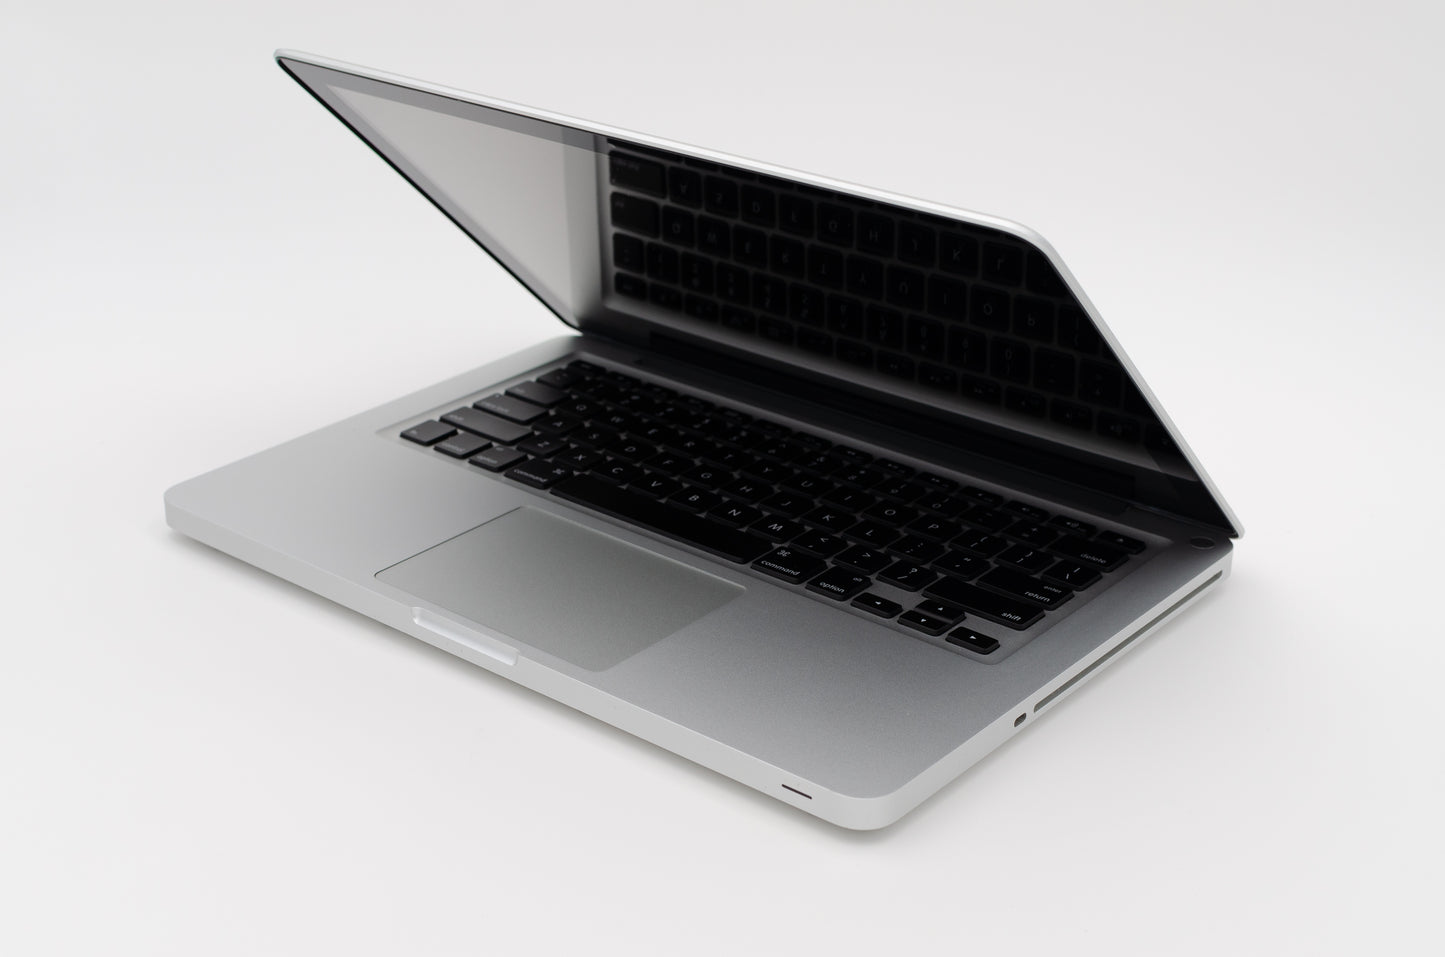 apple-mid-2010-13.3-inch-macbook-pro-a1278-aluminum-c2d - 2.4ghz processor, 4gb ram, 320m - 256mb gpu-mc374ll/a-5